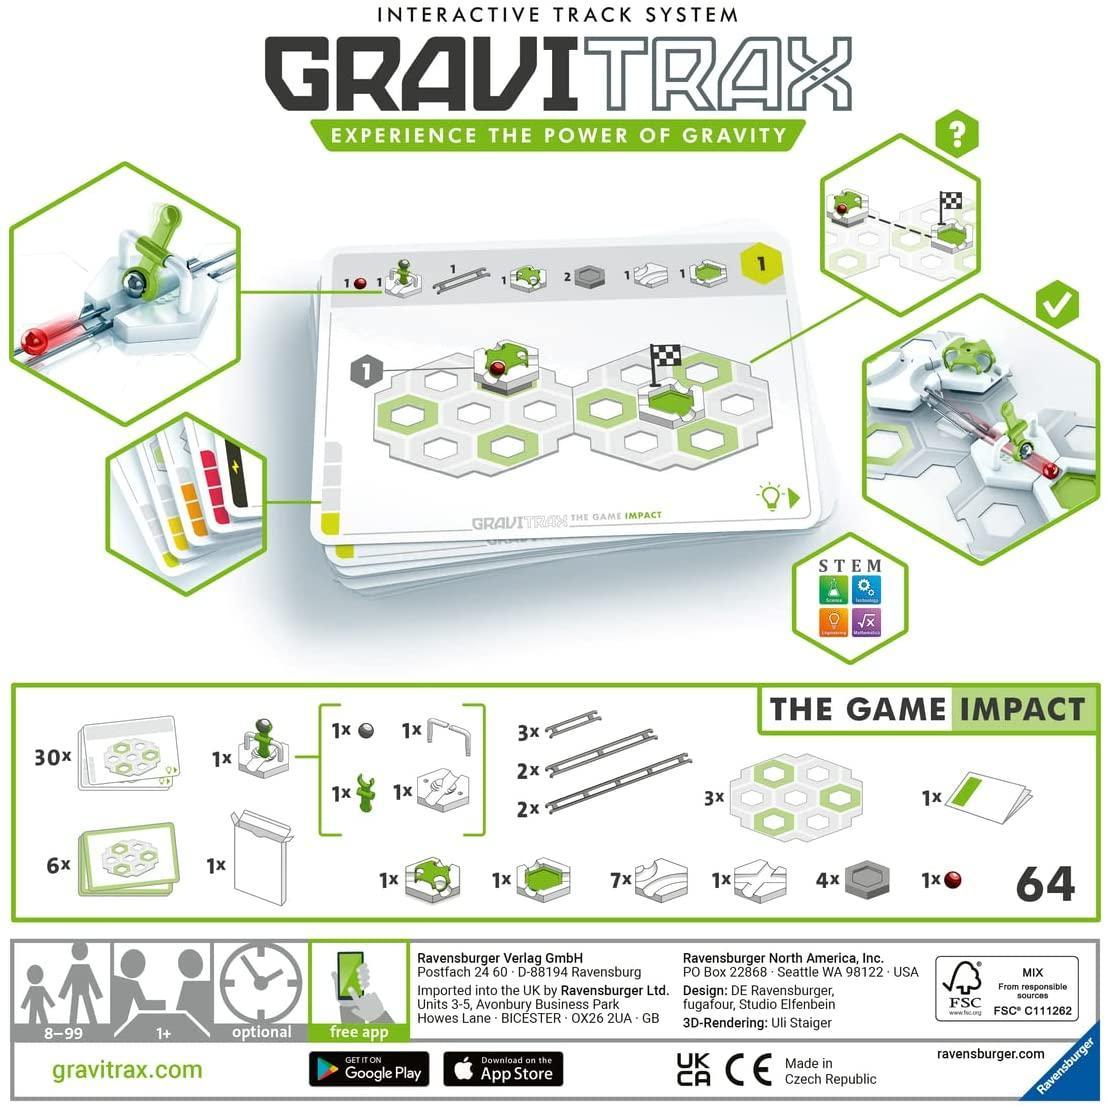 ravensburger gravitrax the game impact